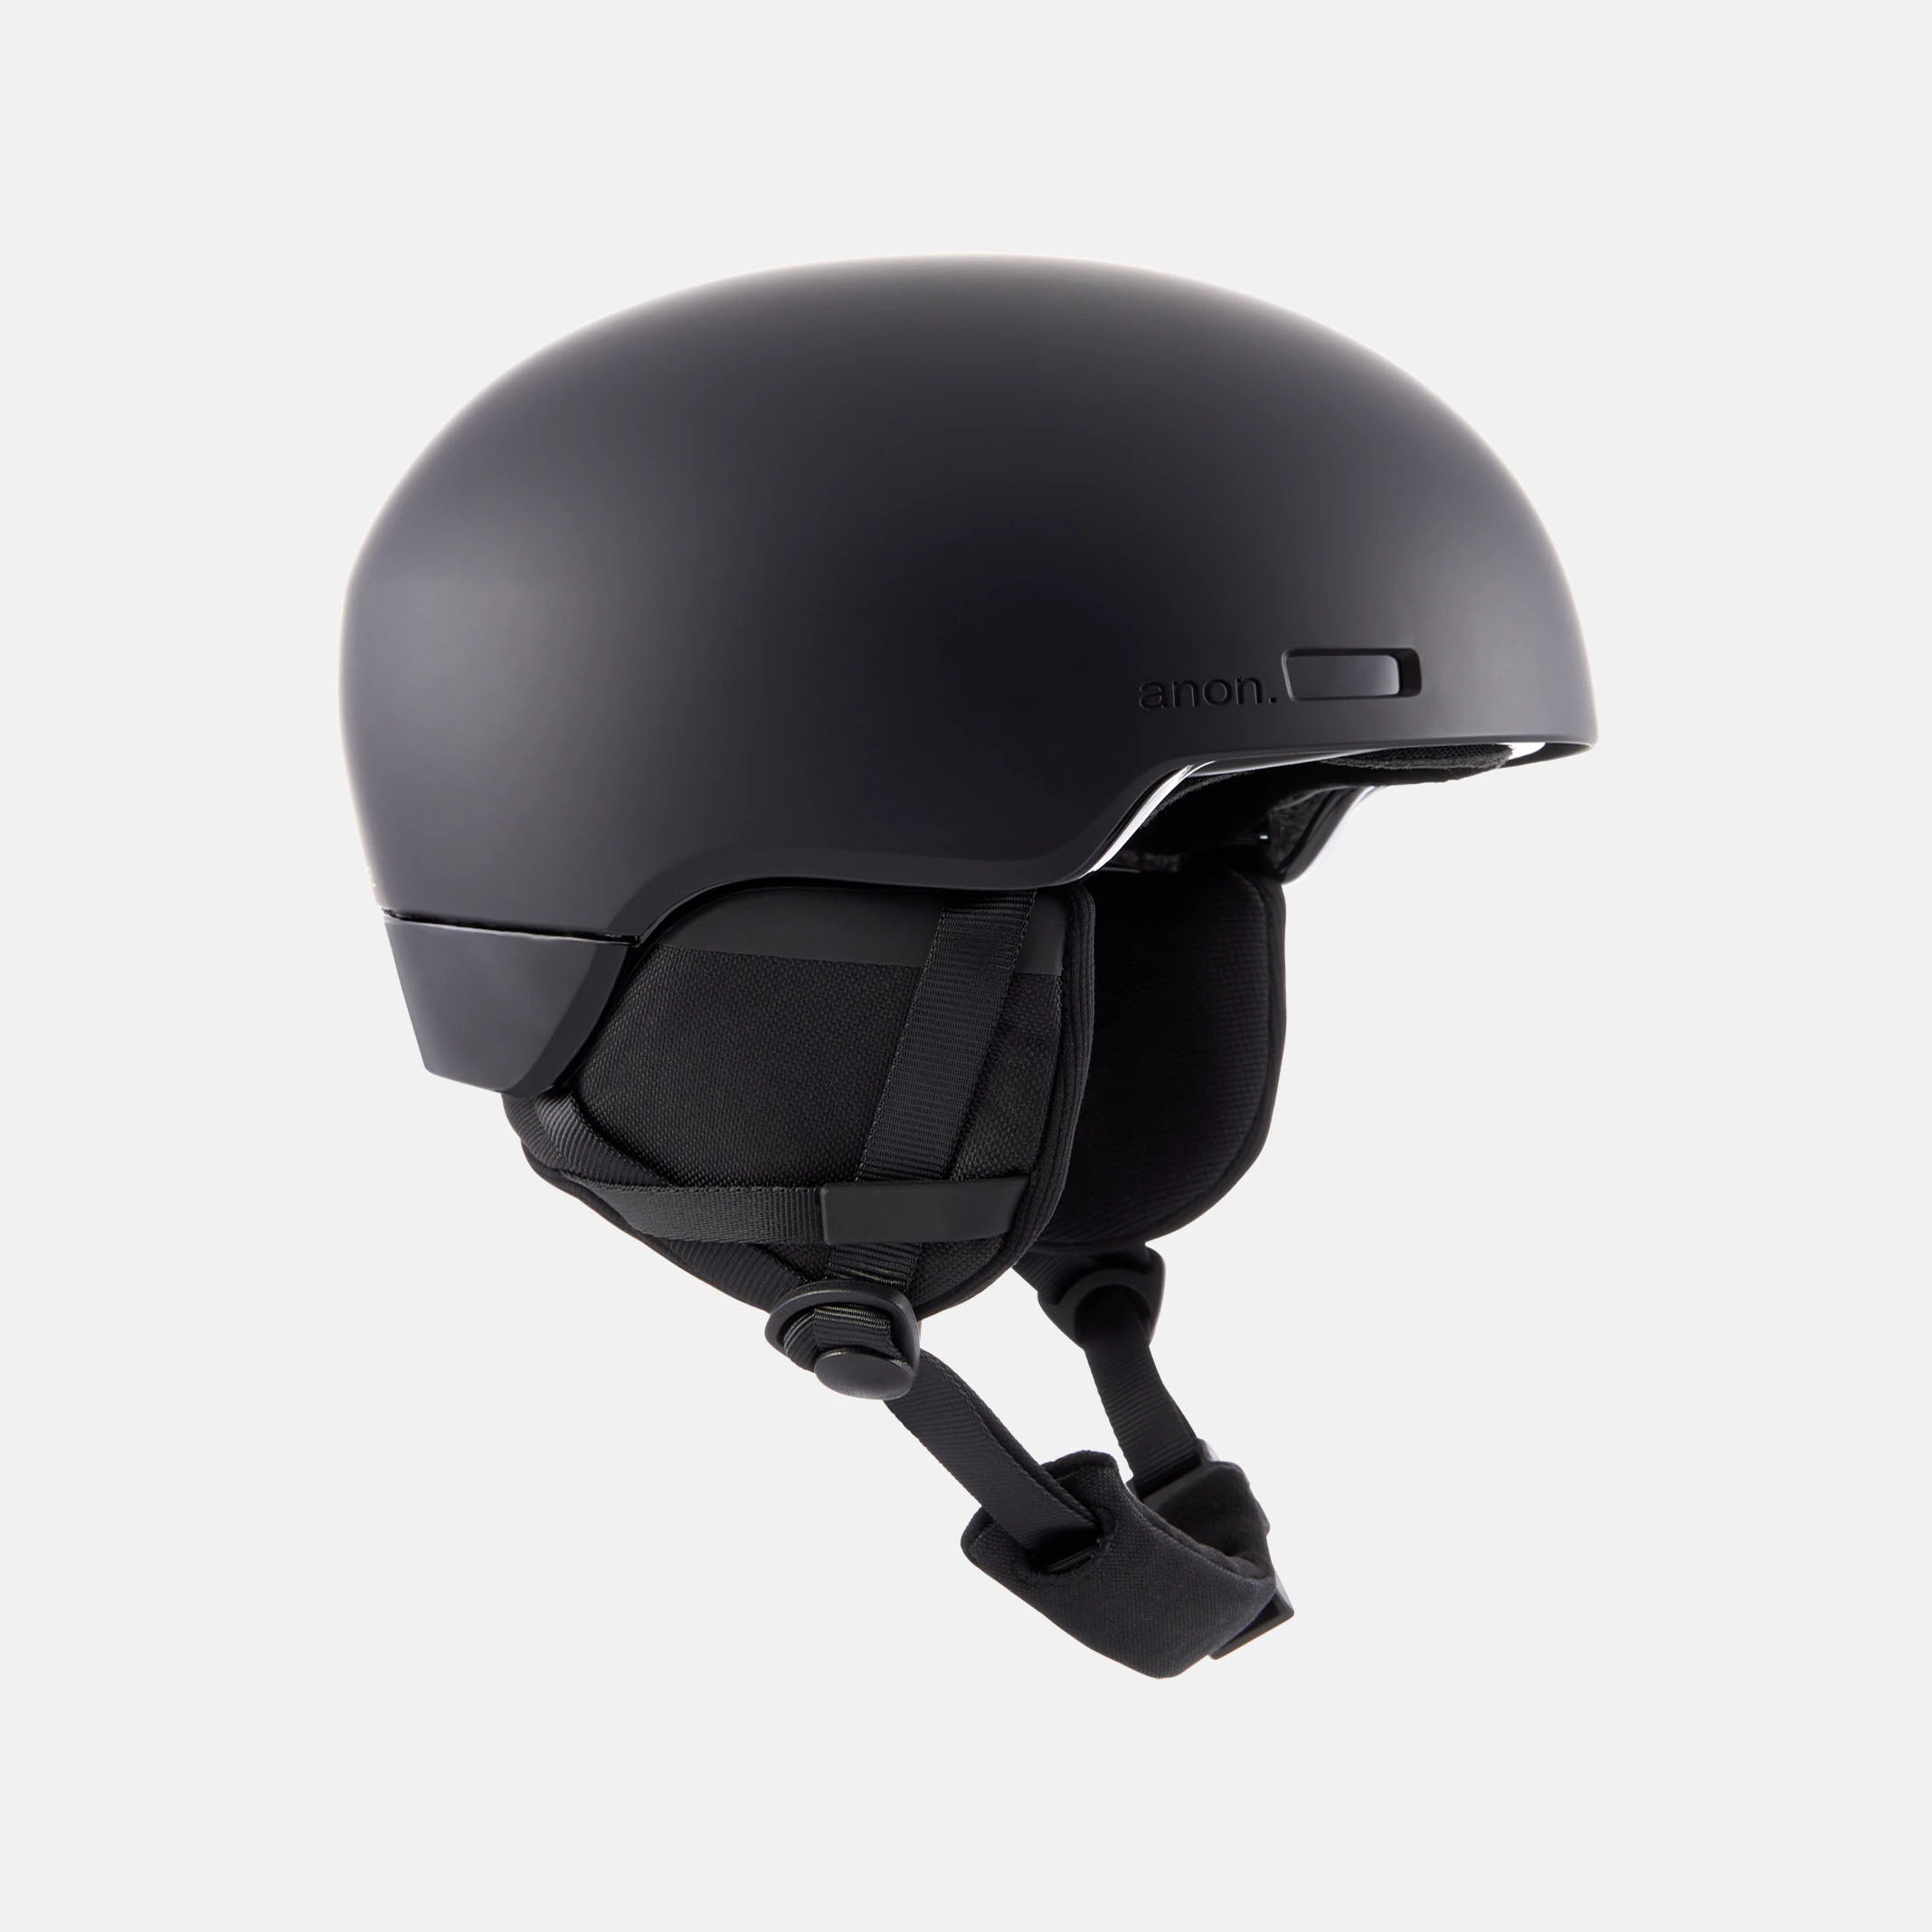 Black "ANON WINDHAM" Ski Helmet